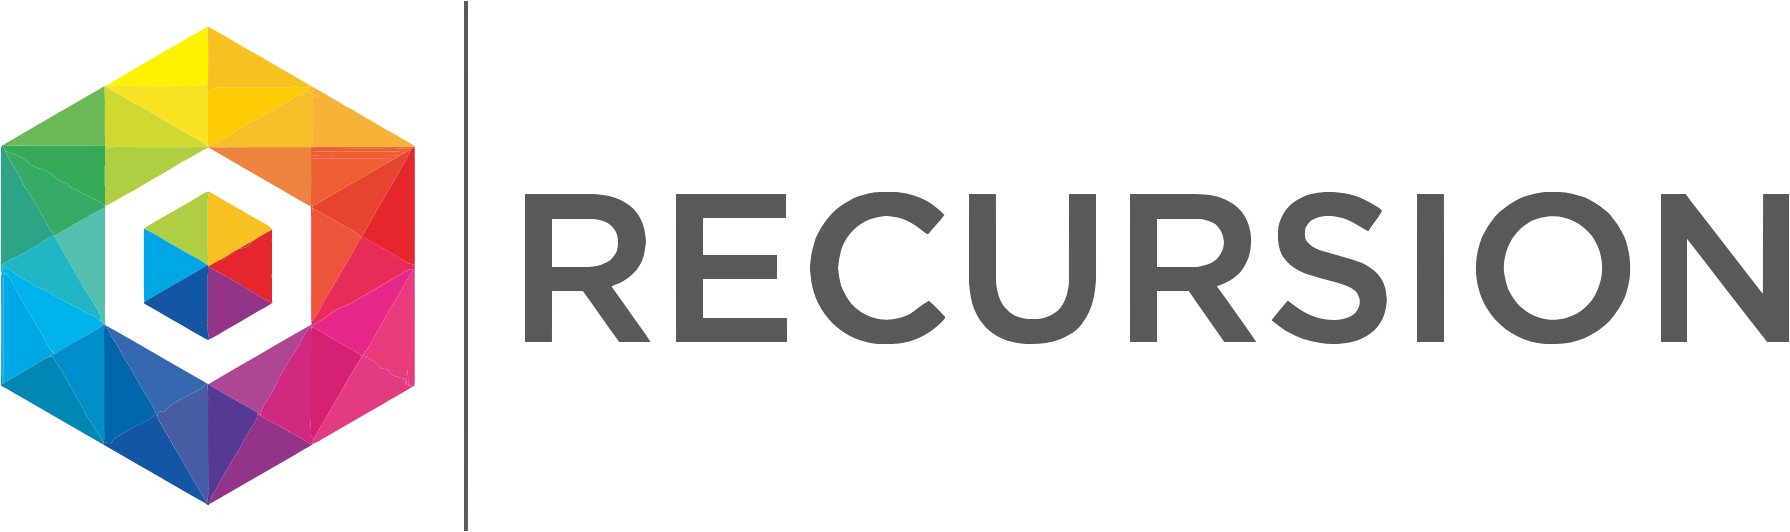 Recursion Pharmaceuticals logo large (transparent PNG)